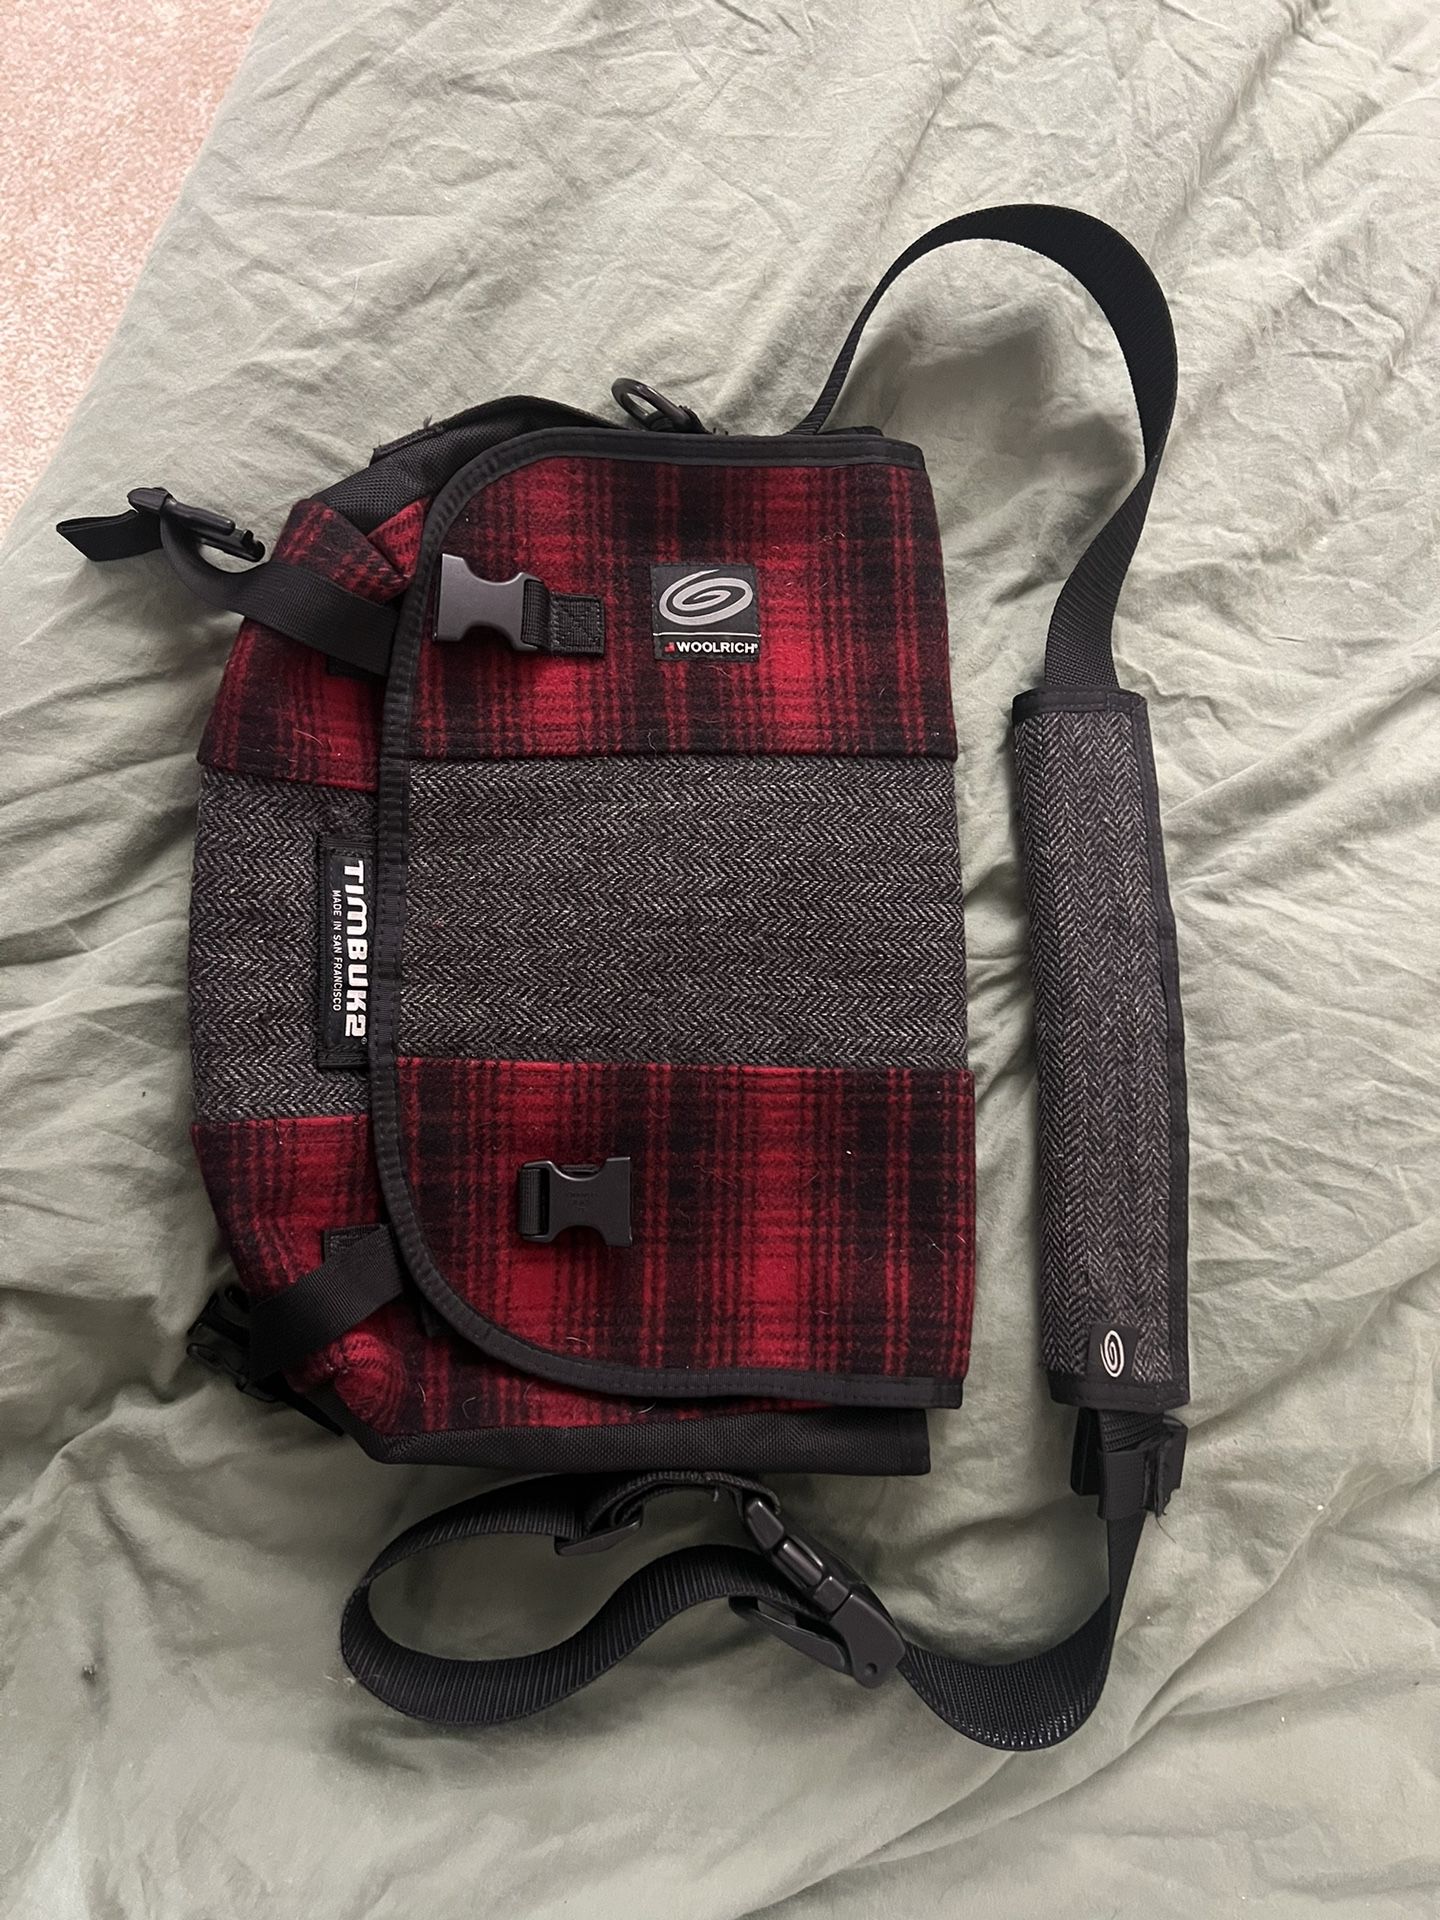 Woolrich Timbuk2 Made In San Francisco SMALL messenger Bag